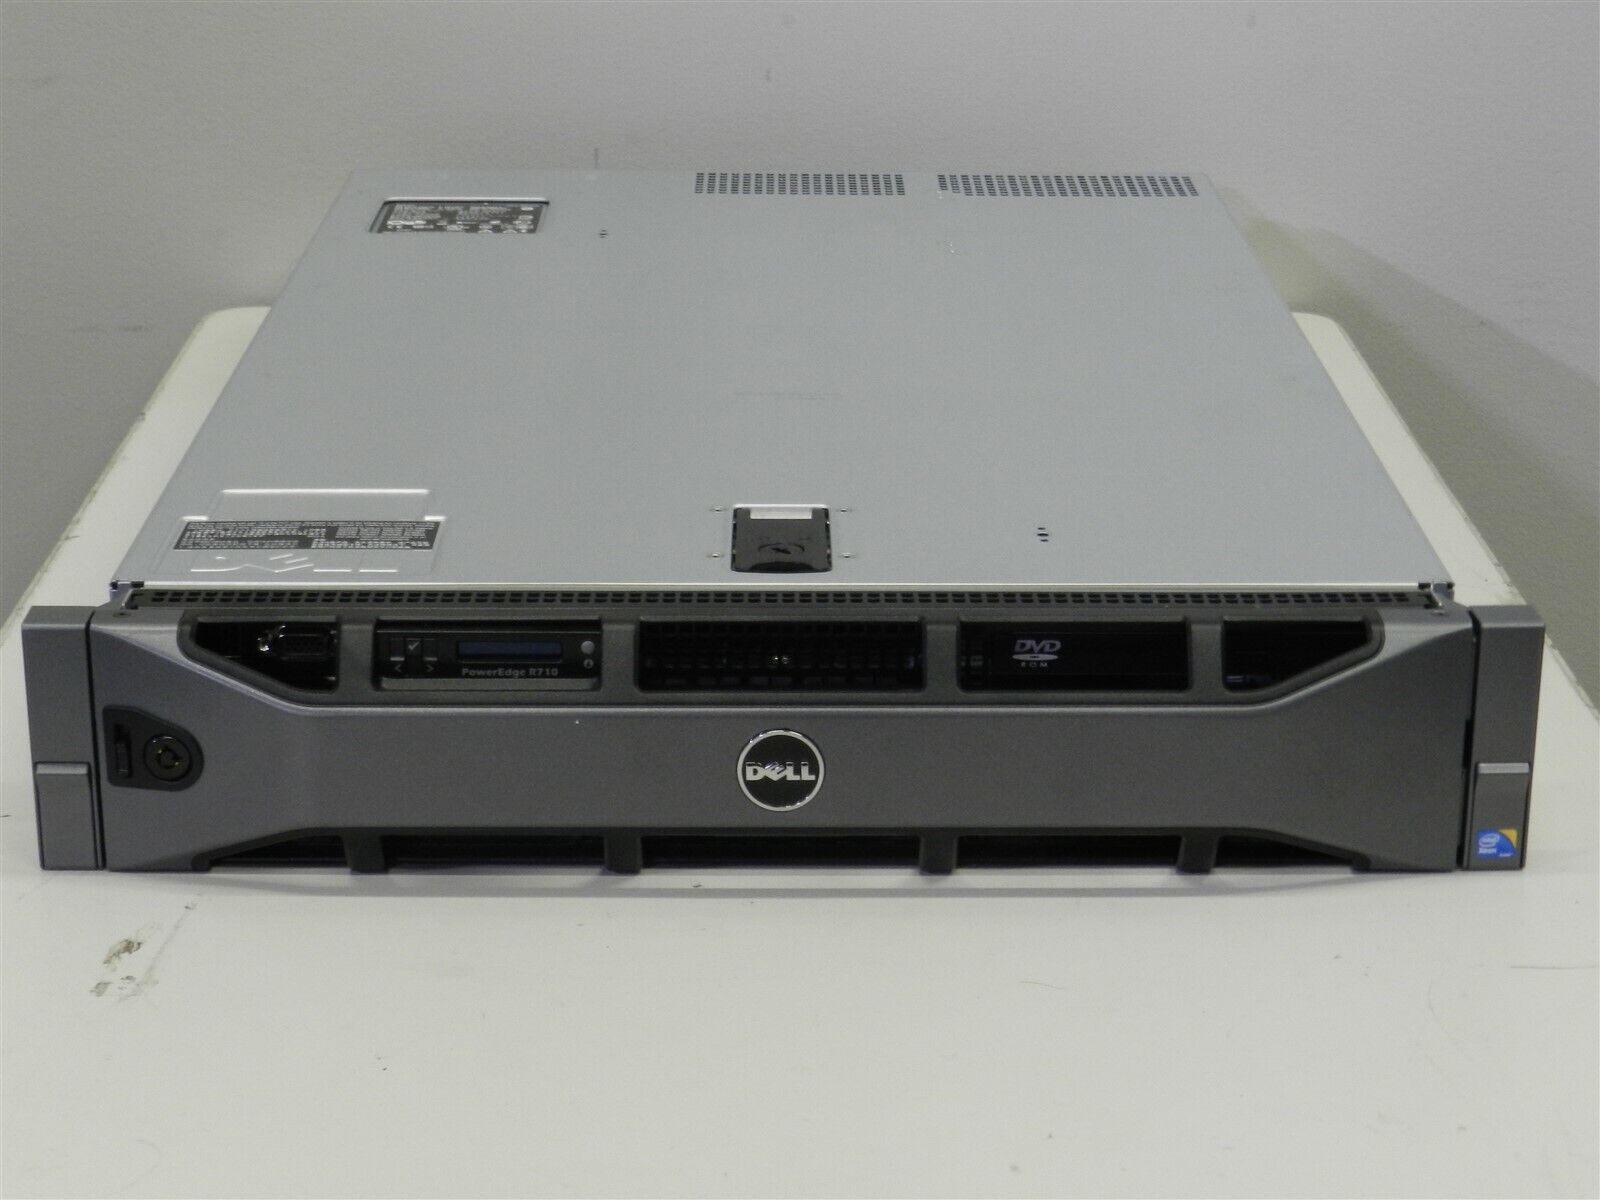 Dell PowerEdge R710 Rack Server Intel Xeon 16GB RAM 146GB HDD PERC 6/i Linux